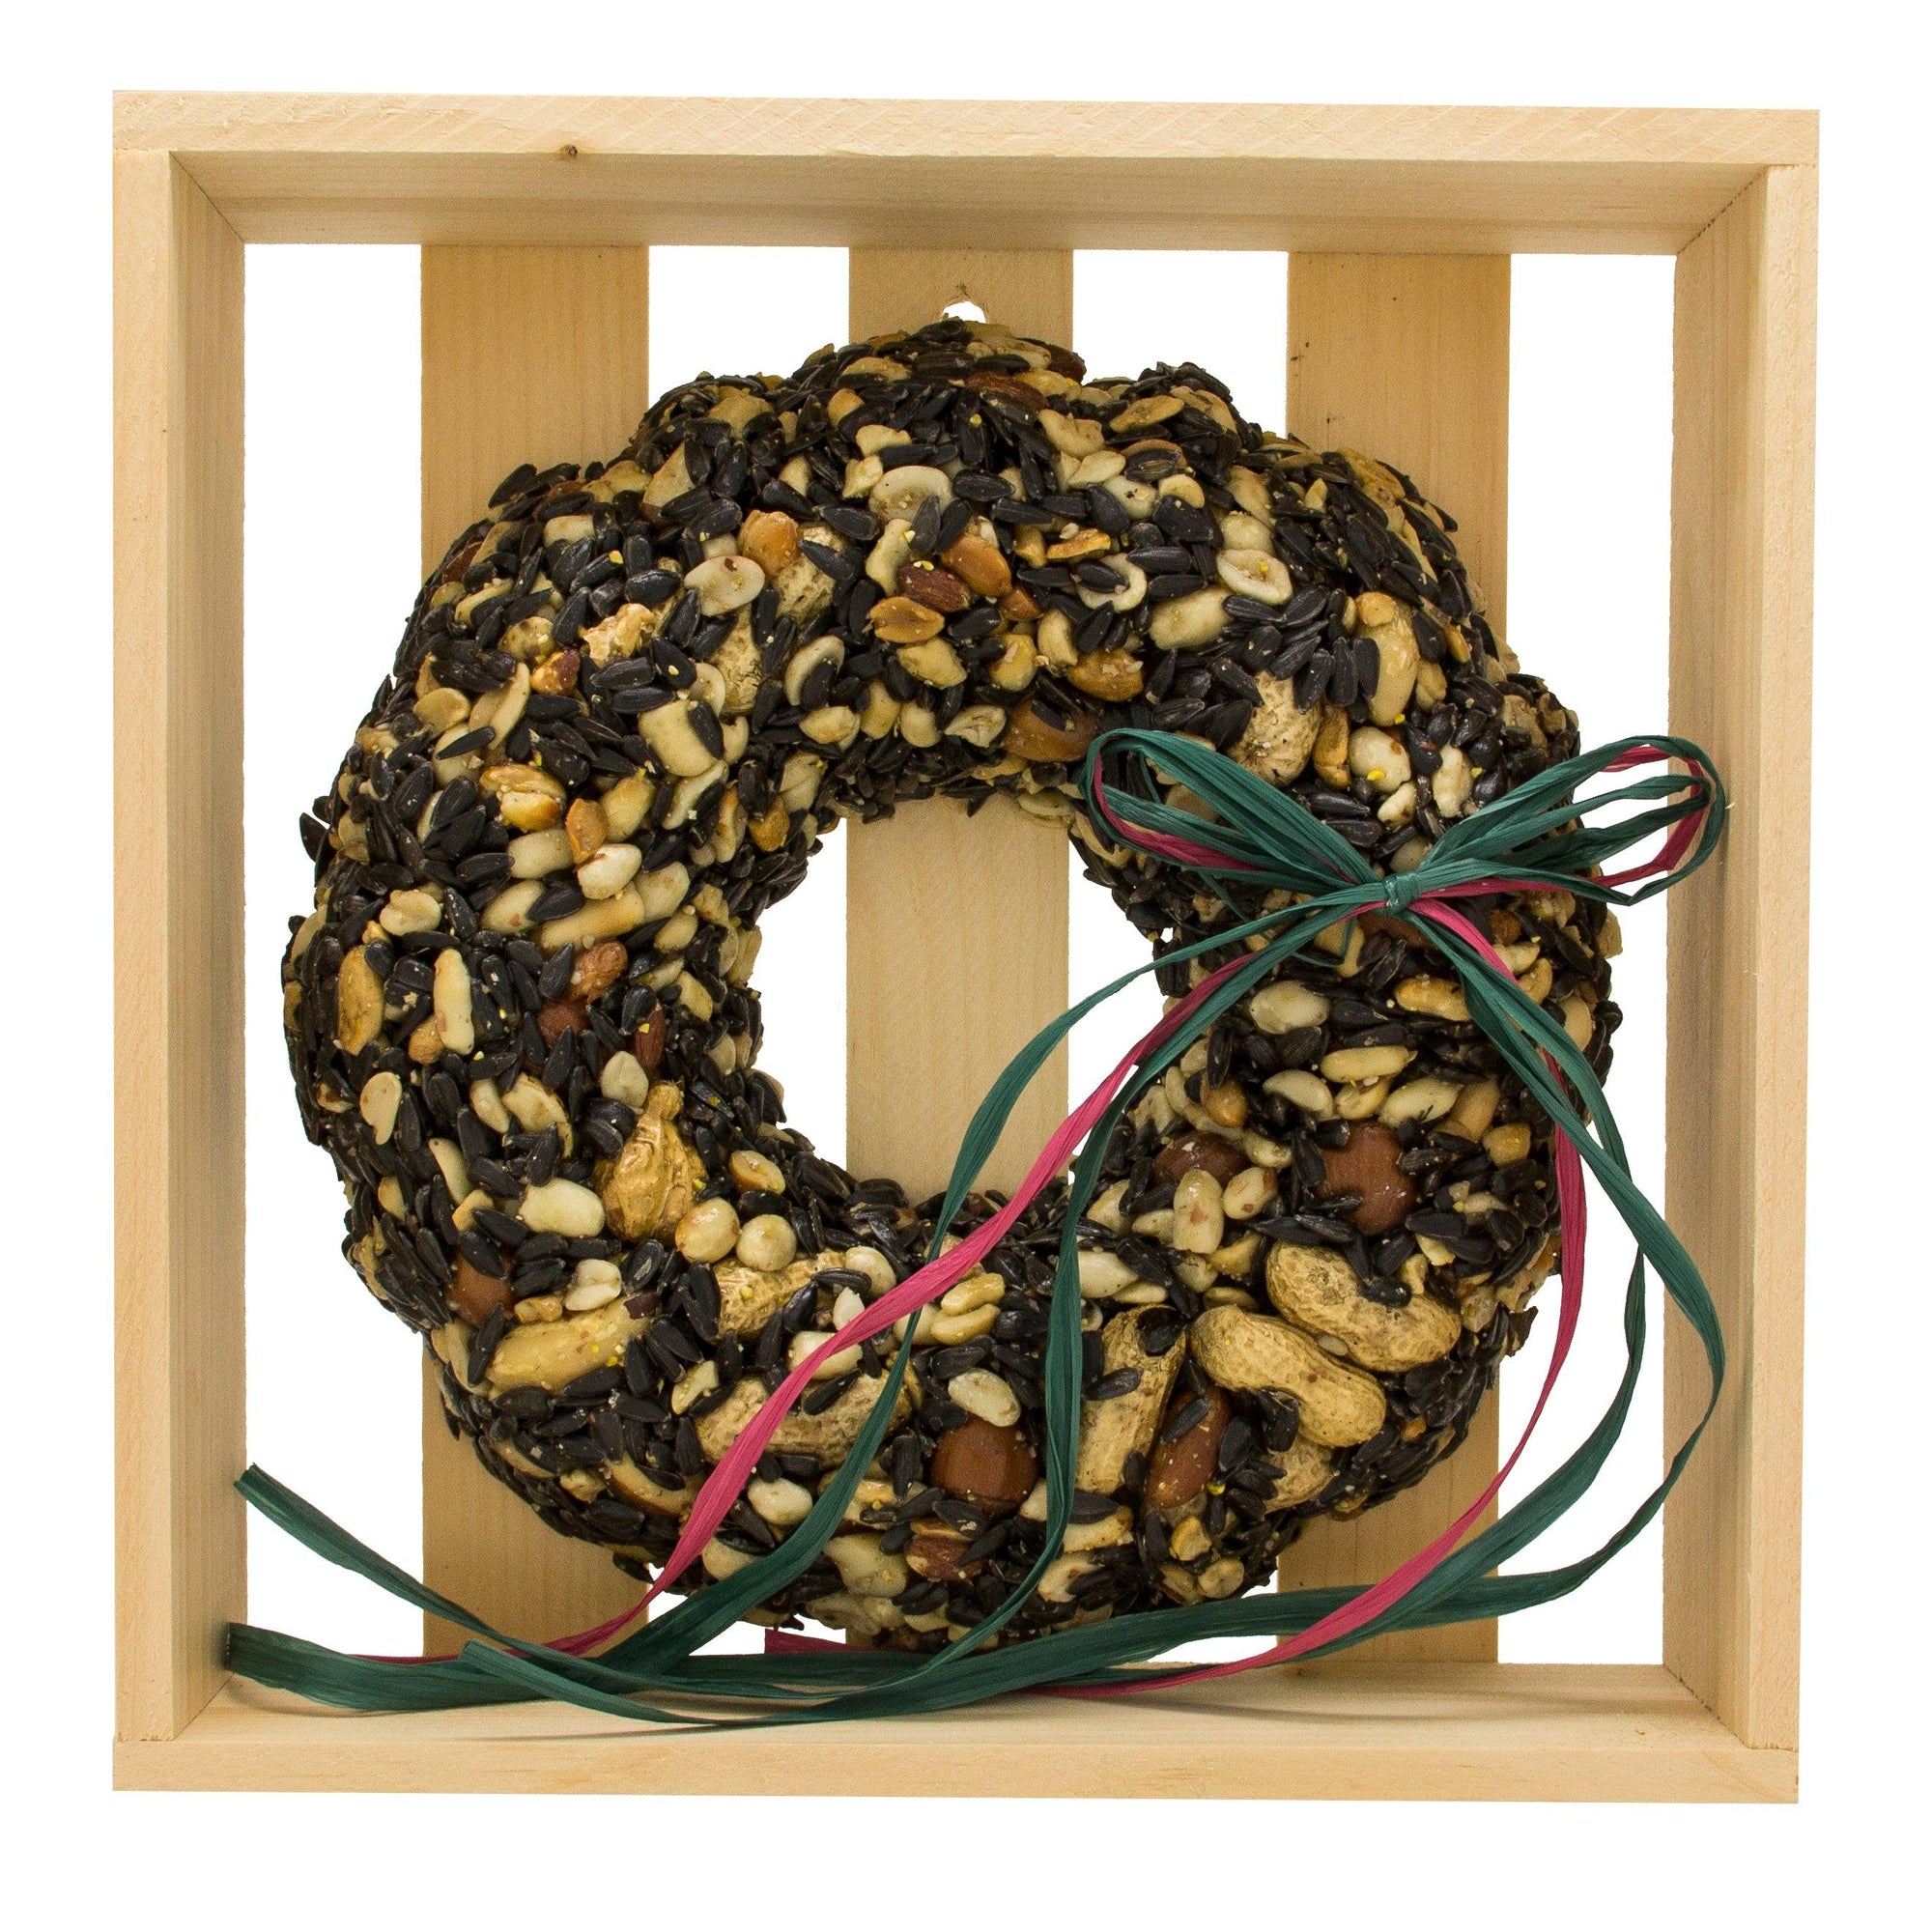 Xmas Nut Wreath In Crate